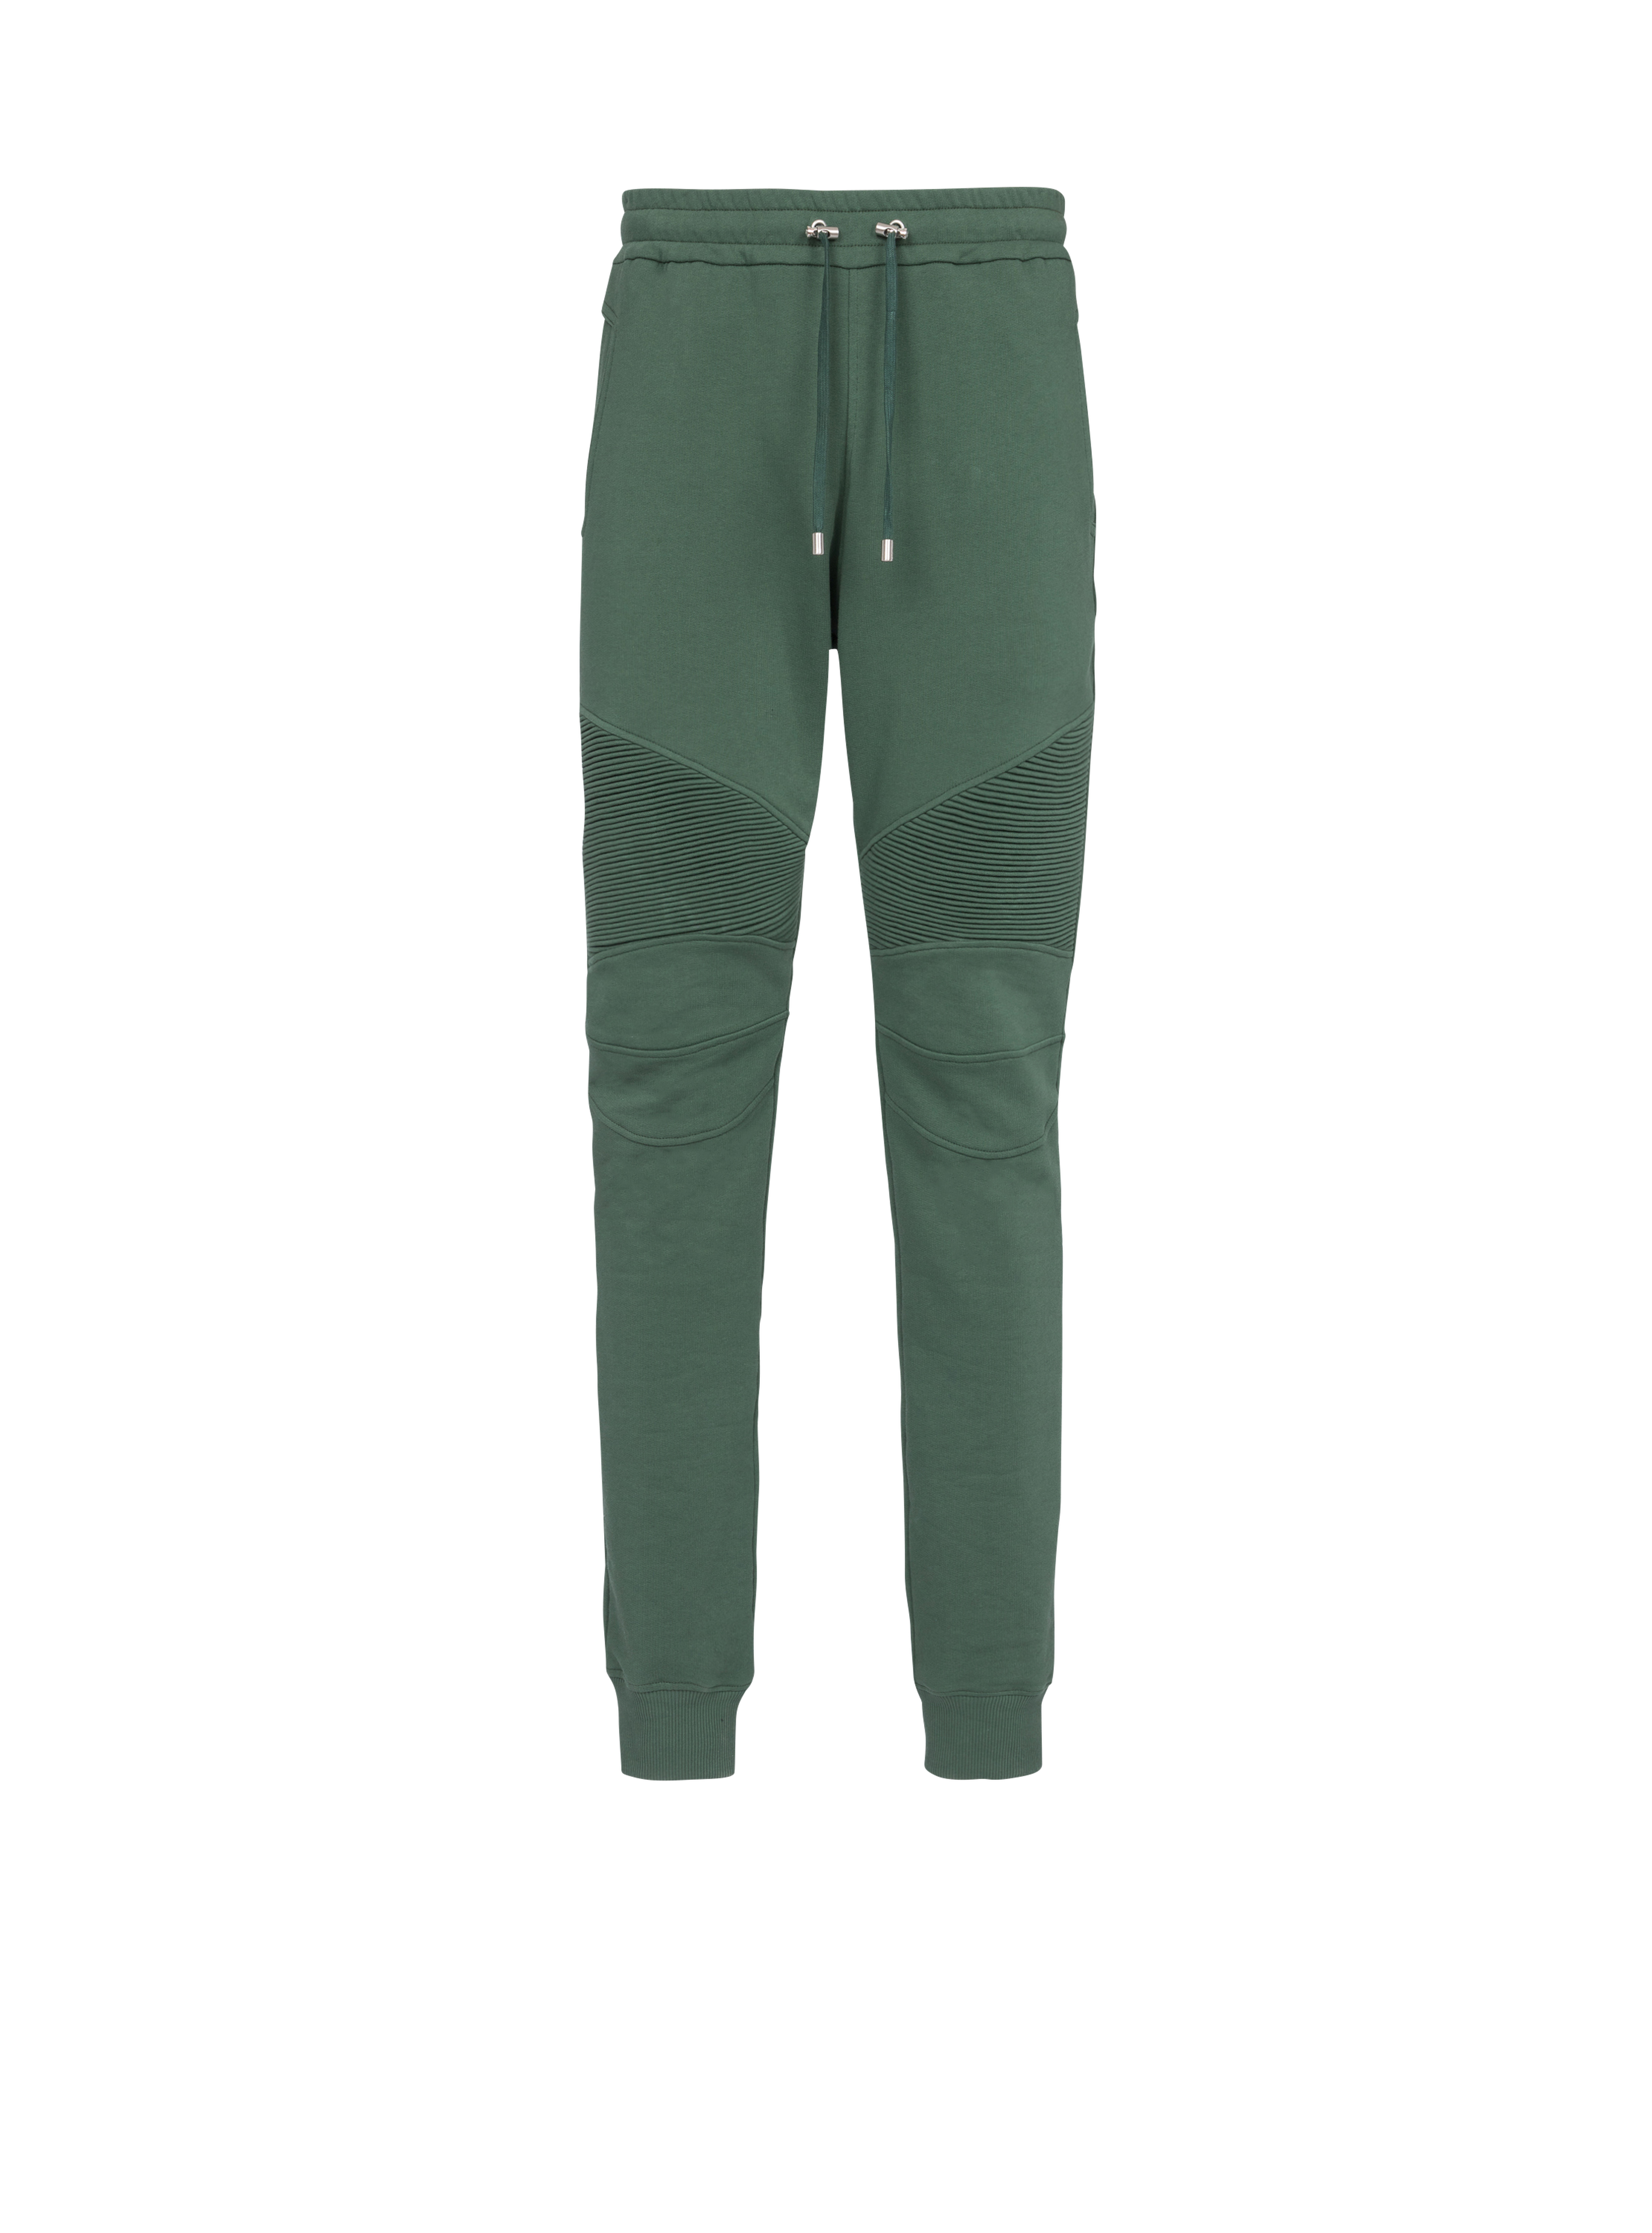 Cotton sweatpants with flocked Balmain Paris logo, green